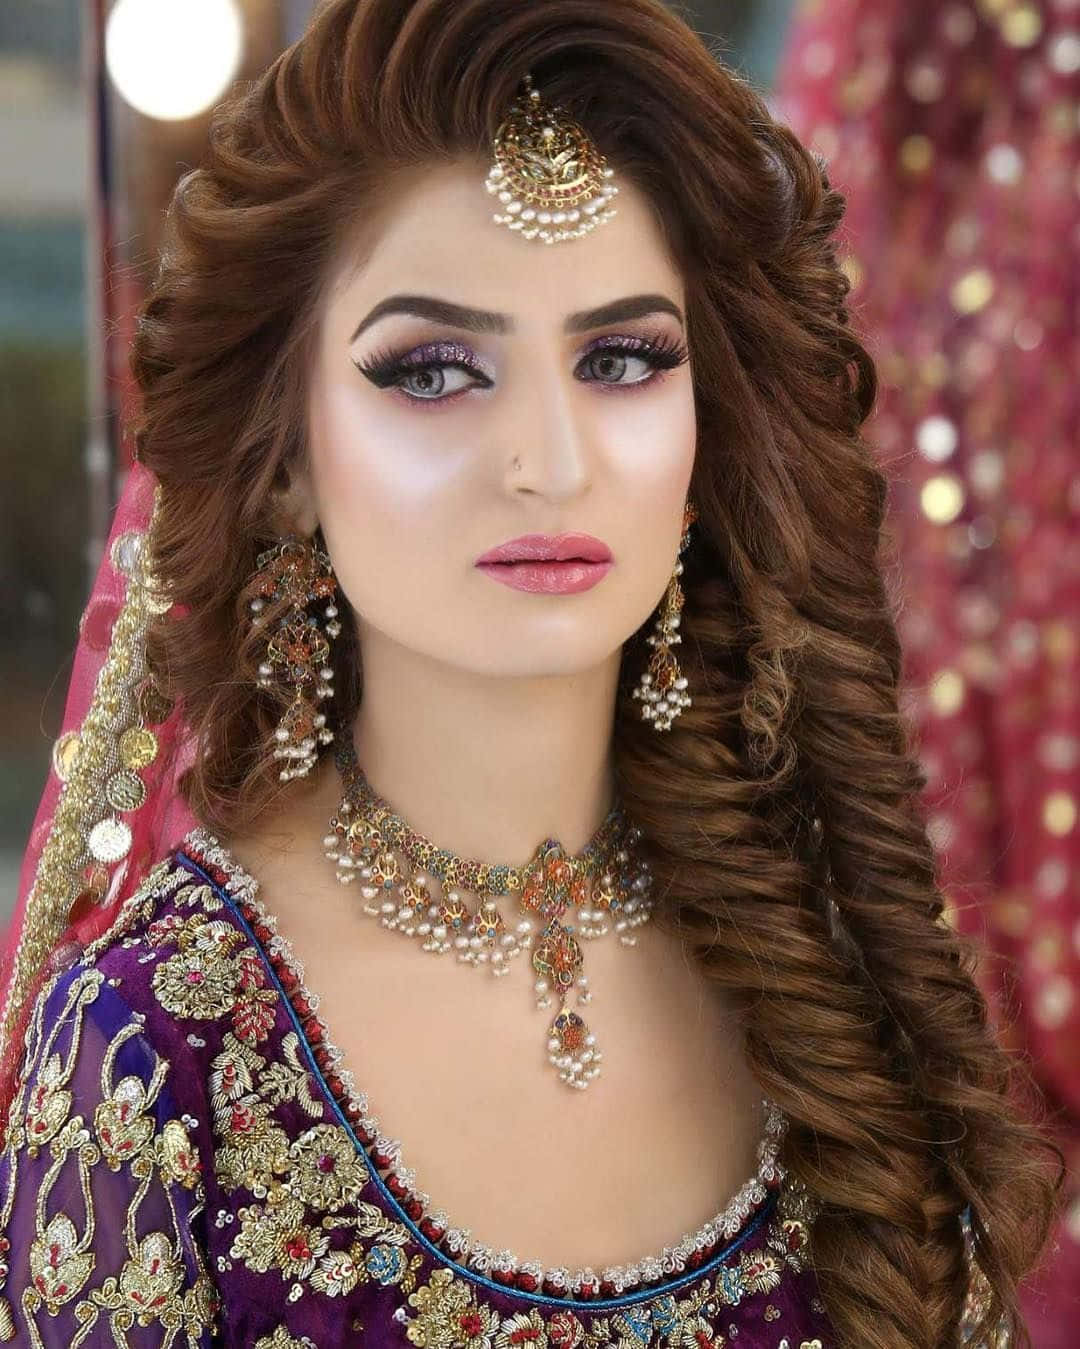 Pakistani Bride In A Purple Bridal Dress